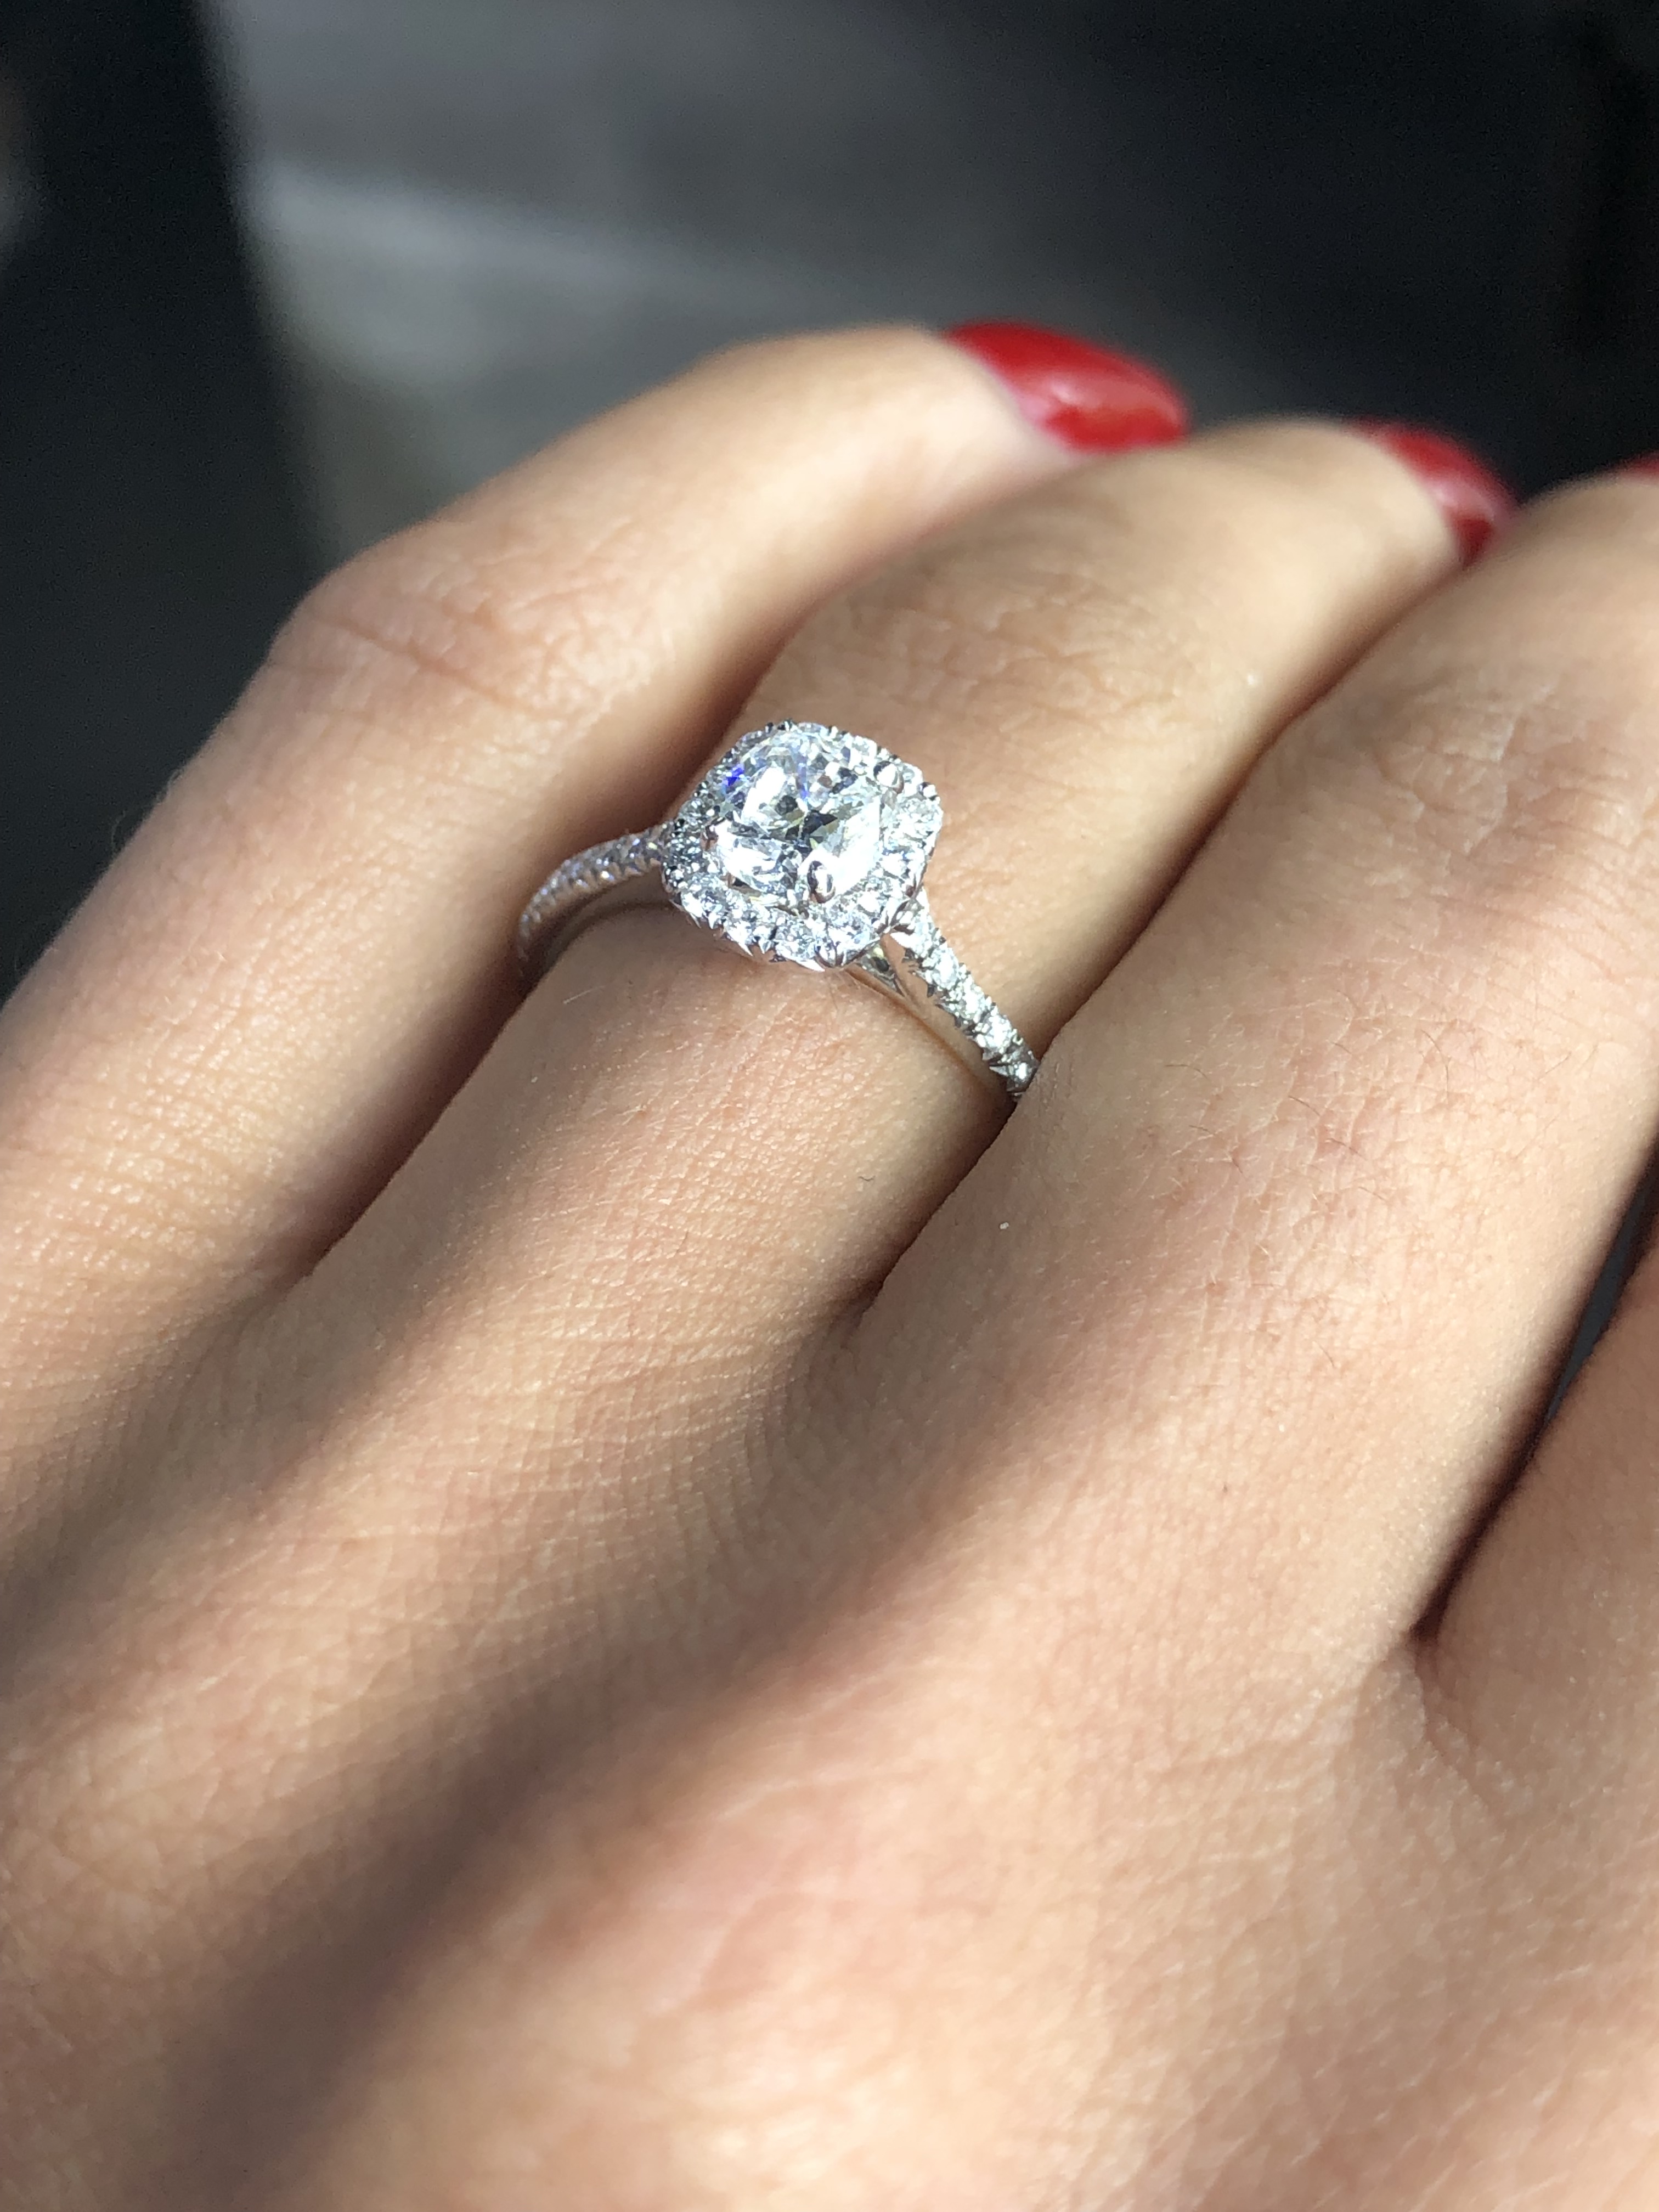 What Does Miranda Lambert's Wedding Ring Look Like